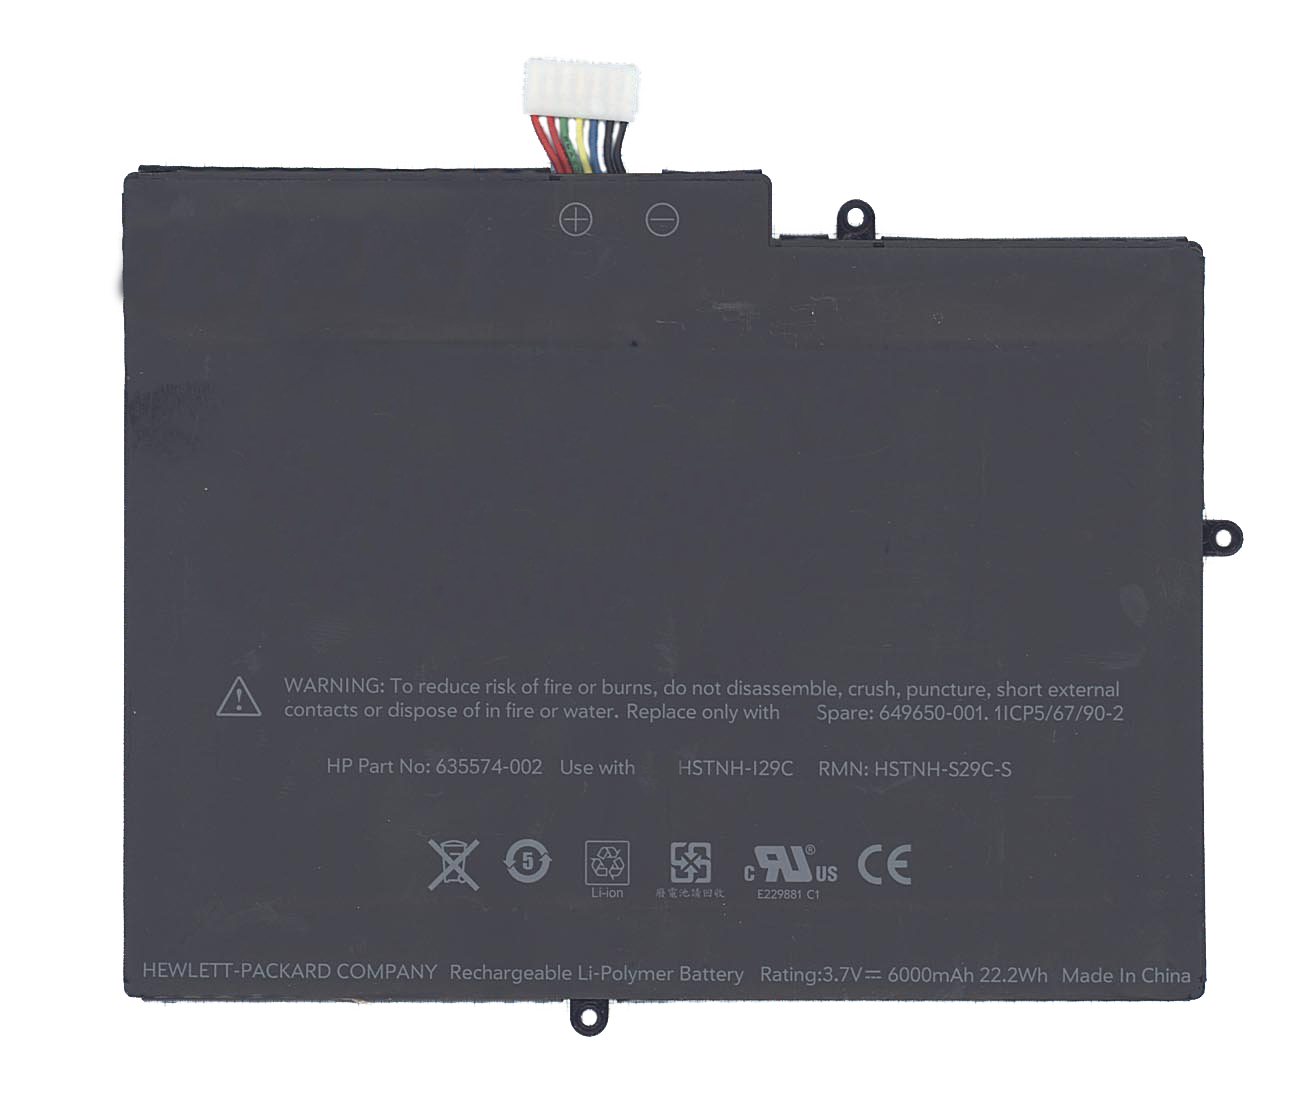 Купить аккумуляторная батарея HSTNH-I29C для HP TouchPad 10 (649650-001)